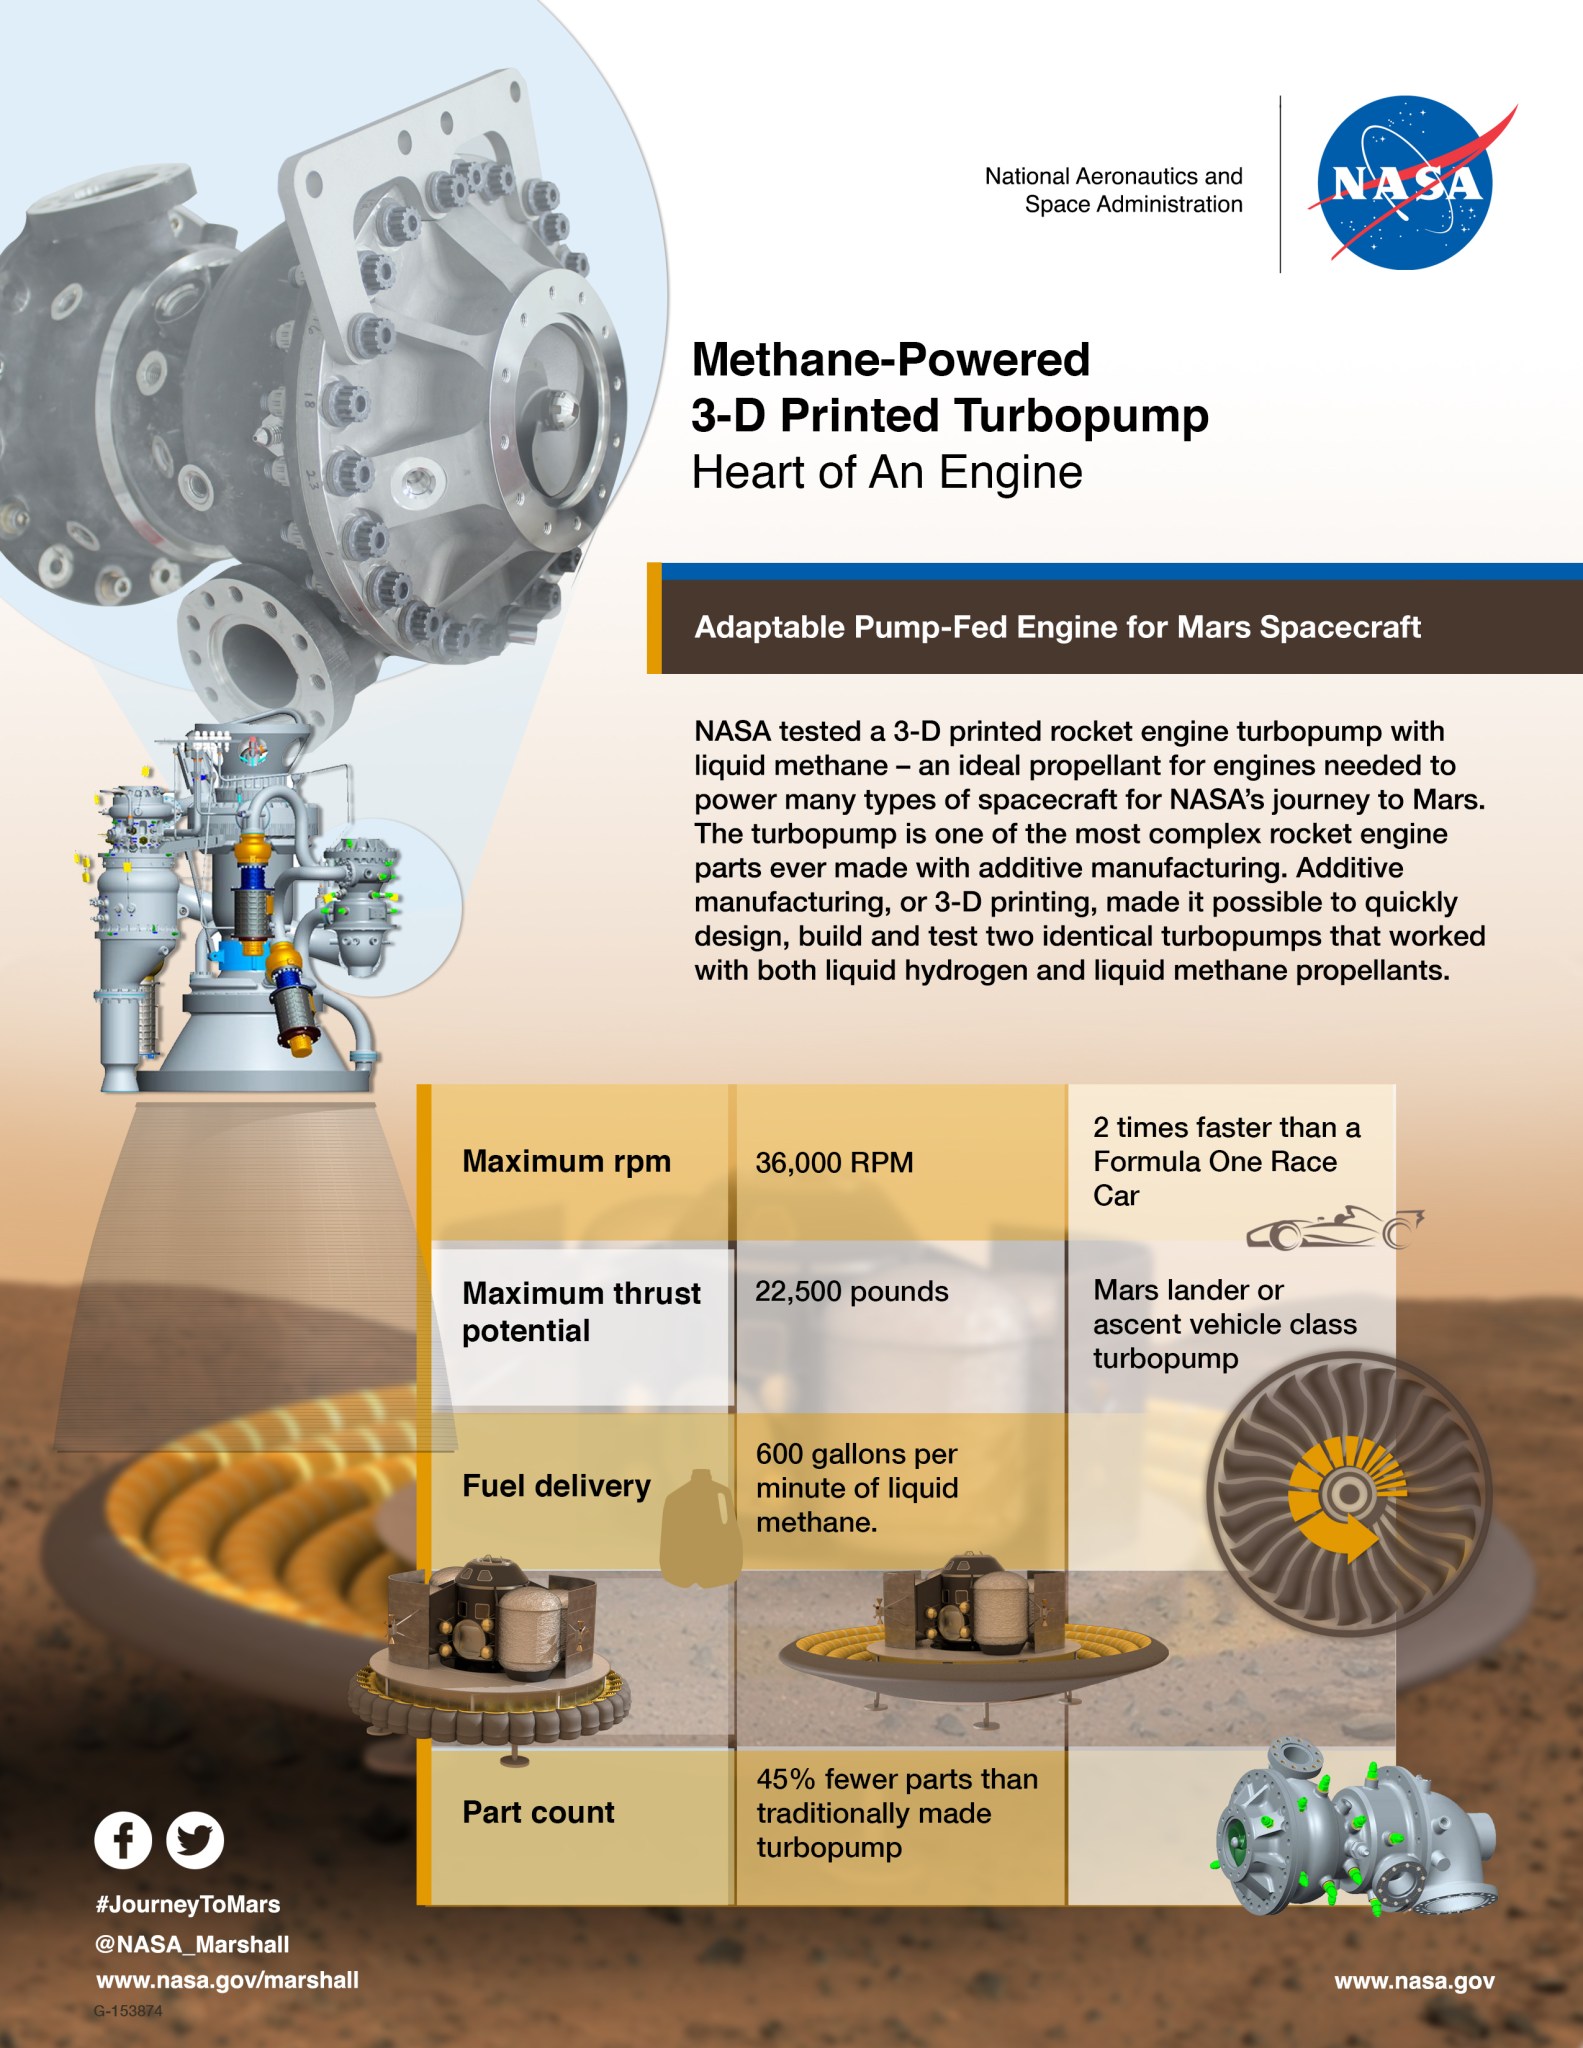 Methane-powereed 3-D Printed turbopump infographic